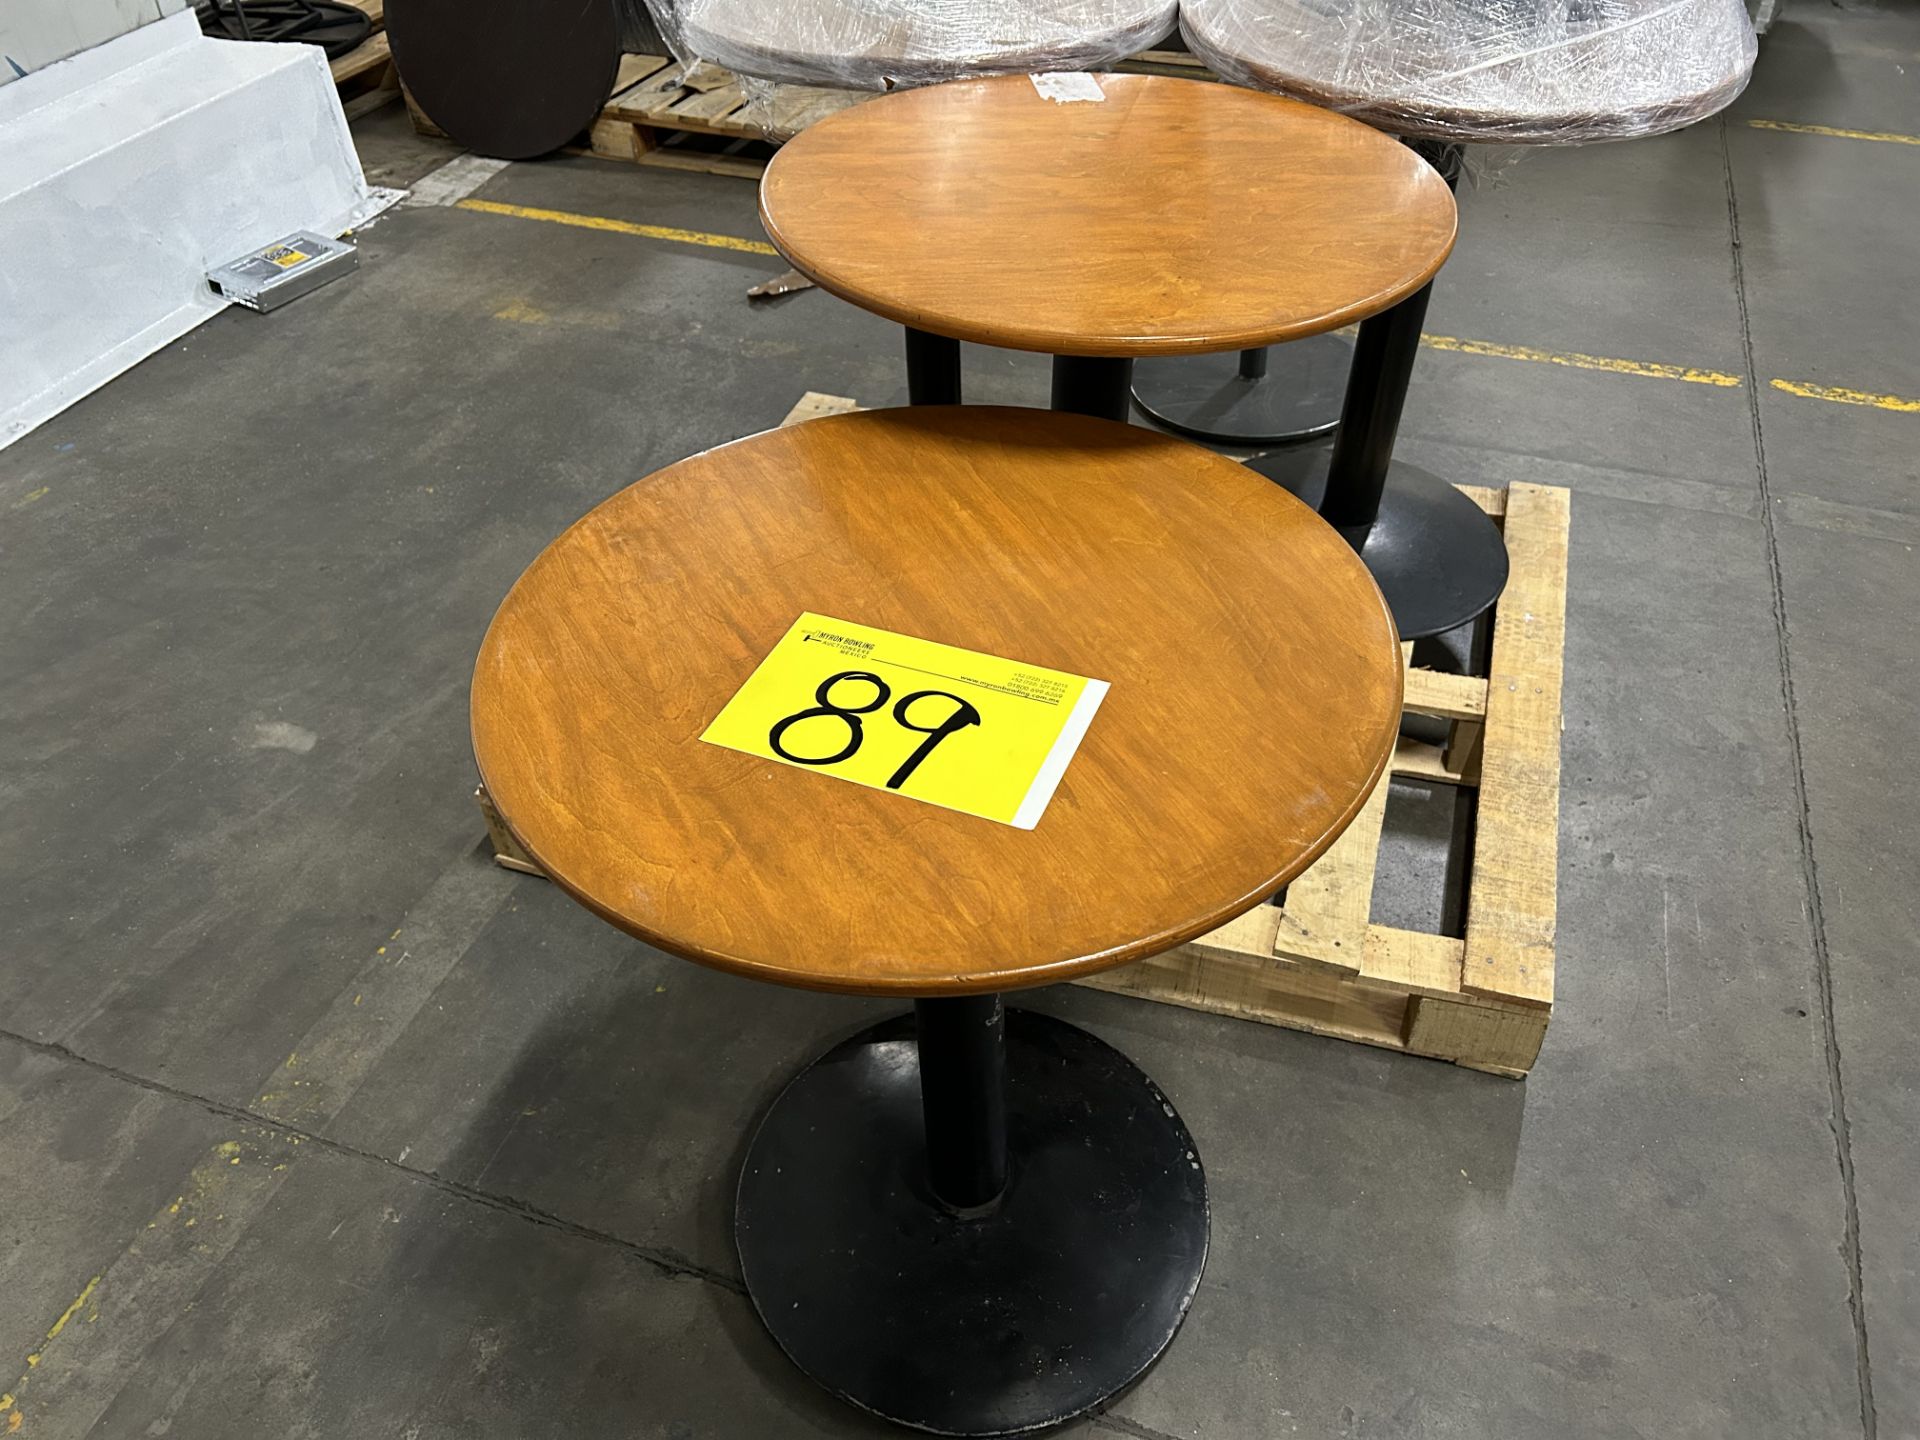 Lote de 10 mesas contiene: 6 mesas redondas de 60cm de diámetro por 72cm; 4 mesas cuadradas de 60cm - Image 3 of 5